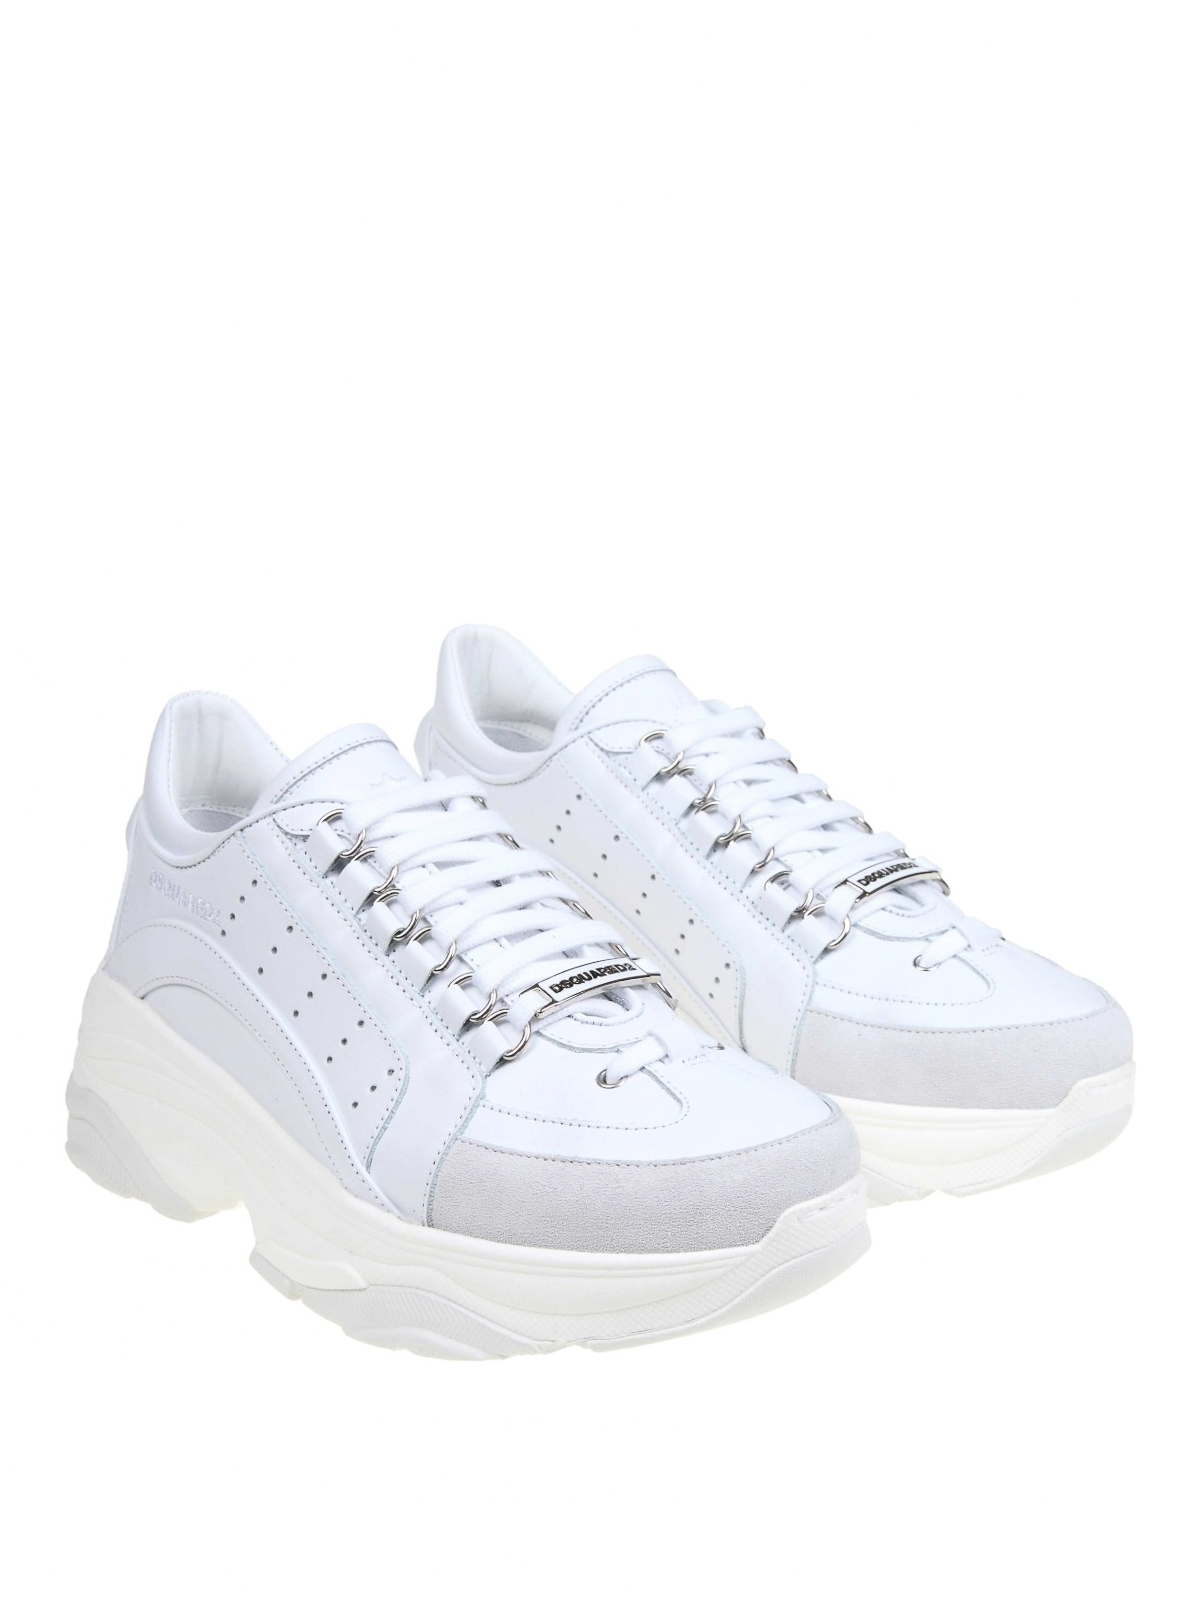 Dsquared2 - Bumpy 551 white sneakers 